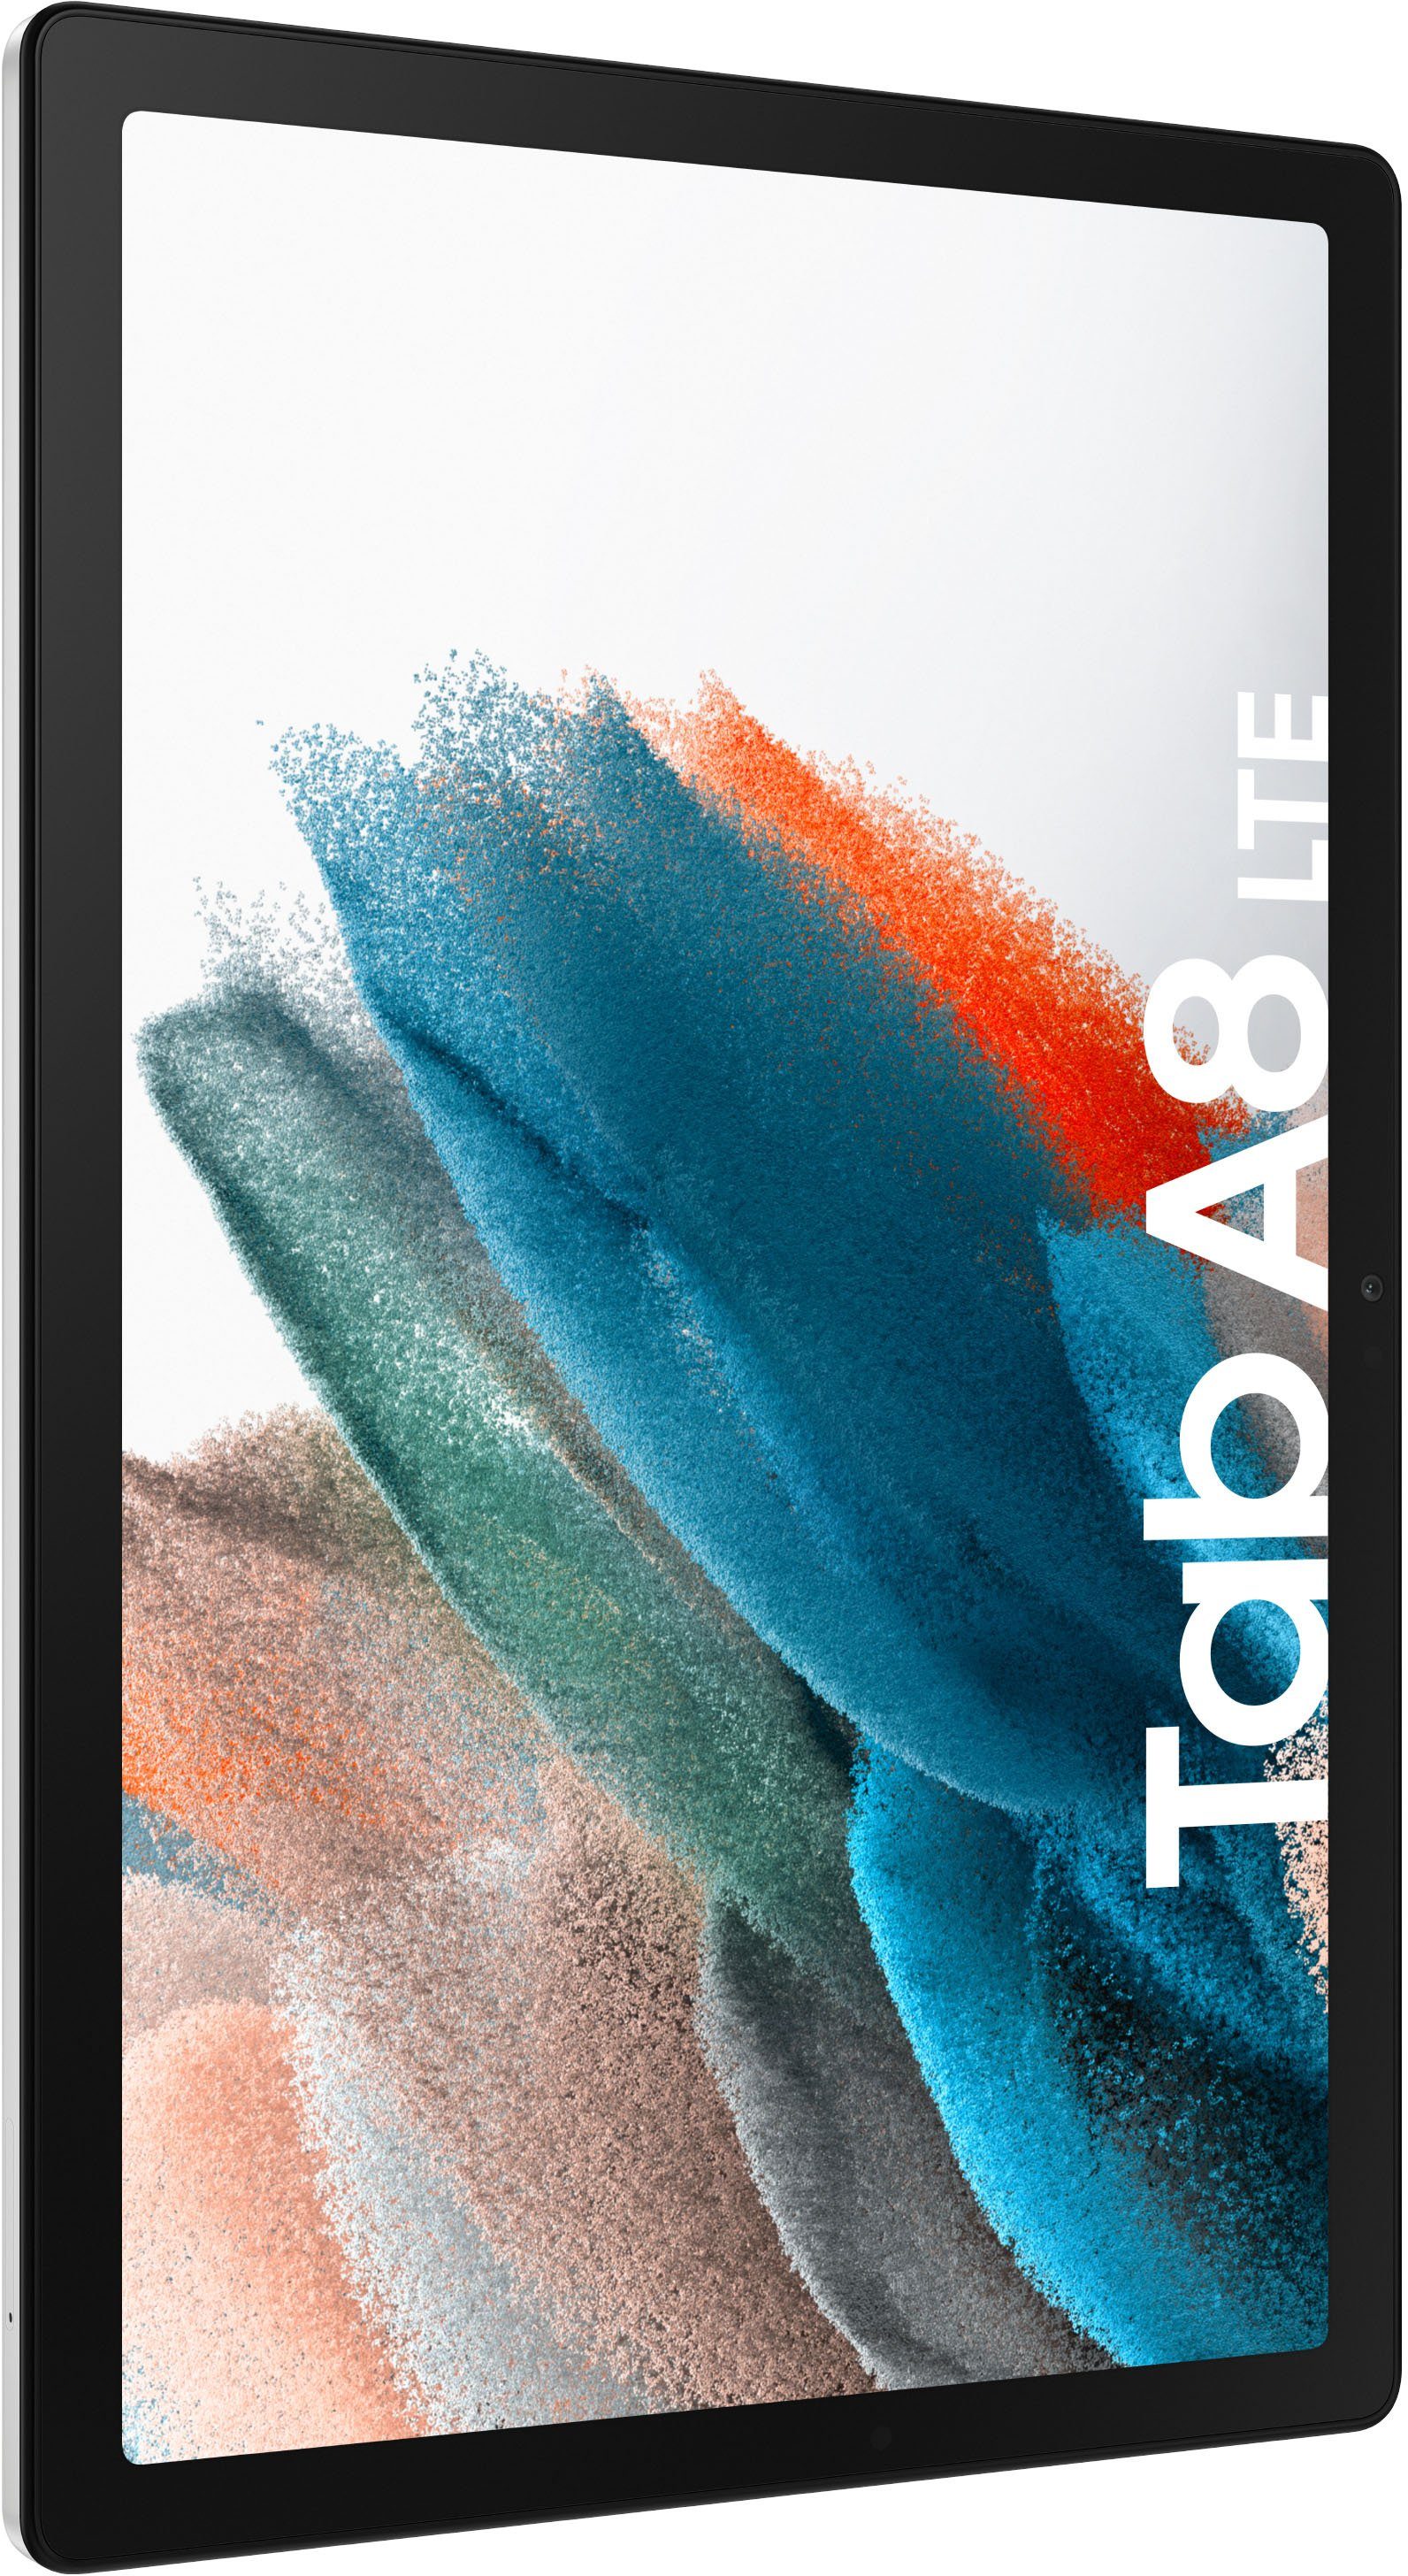 Galaxy 32 (10,5", GB, Tablet Android) A8 LTE Tab silberfarben Samsung